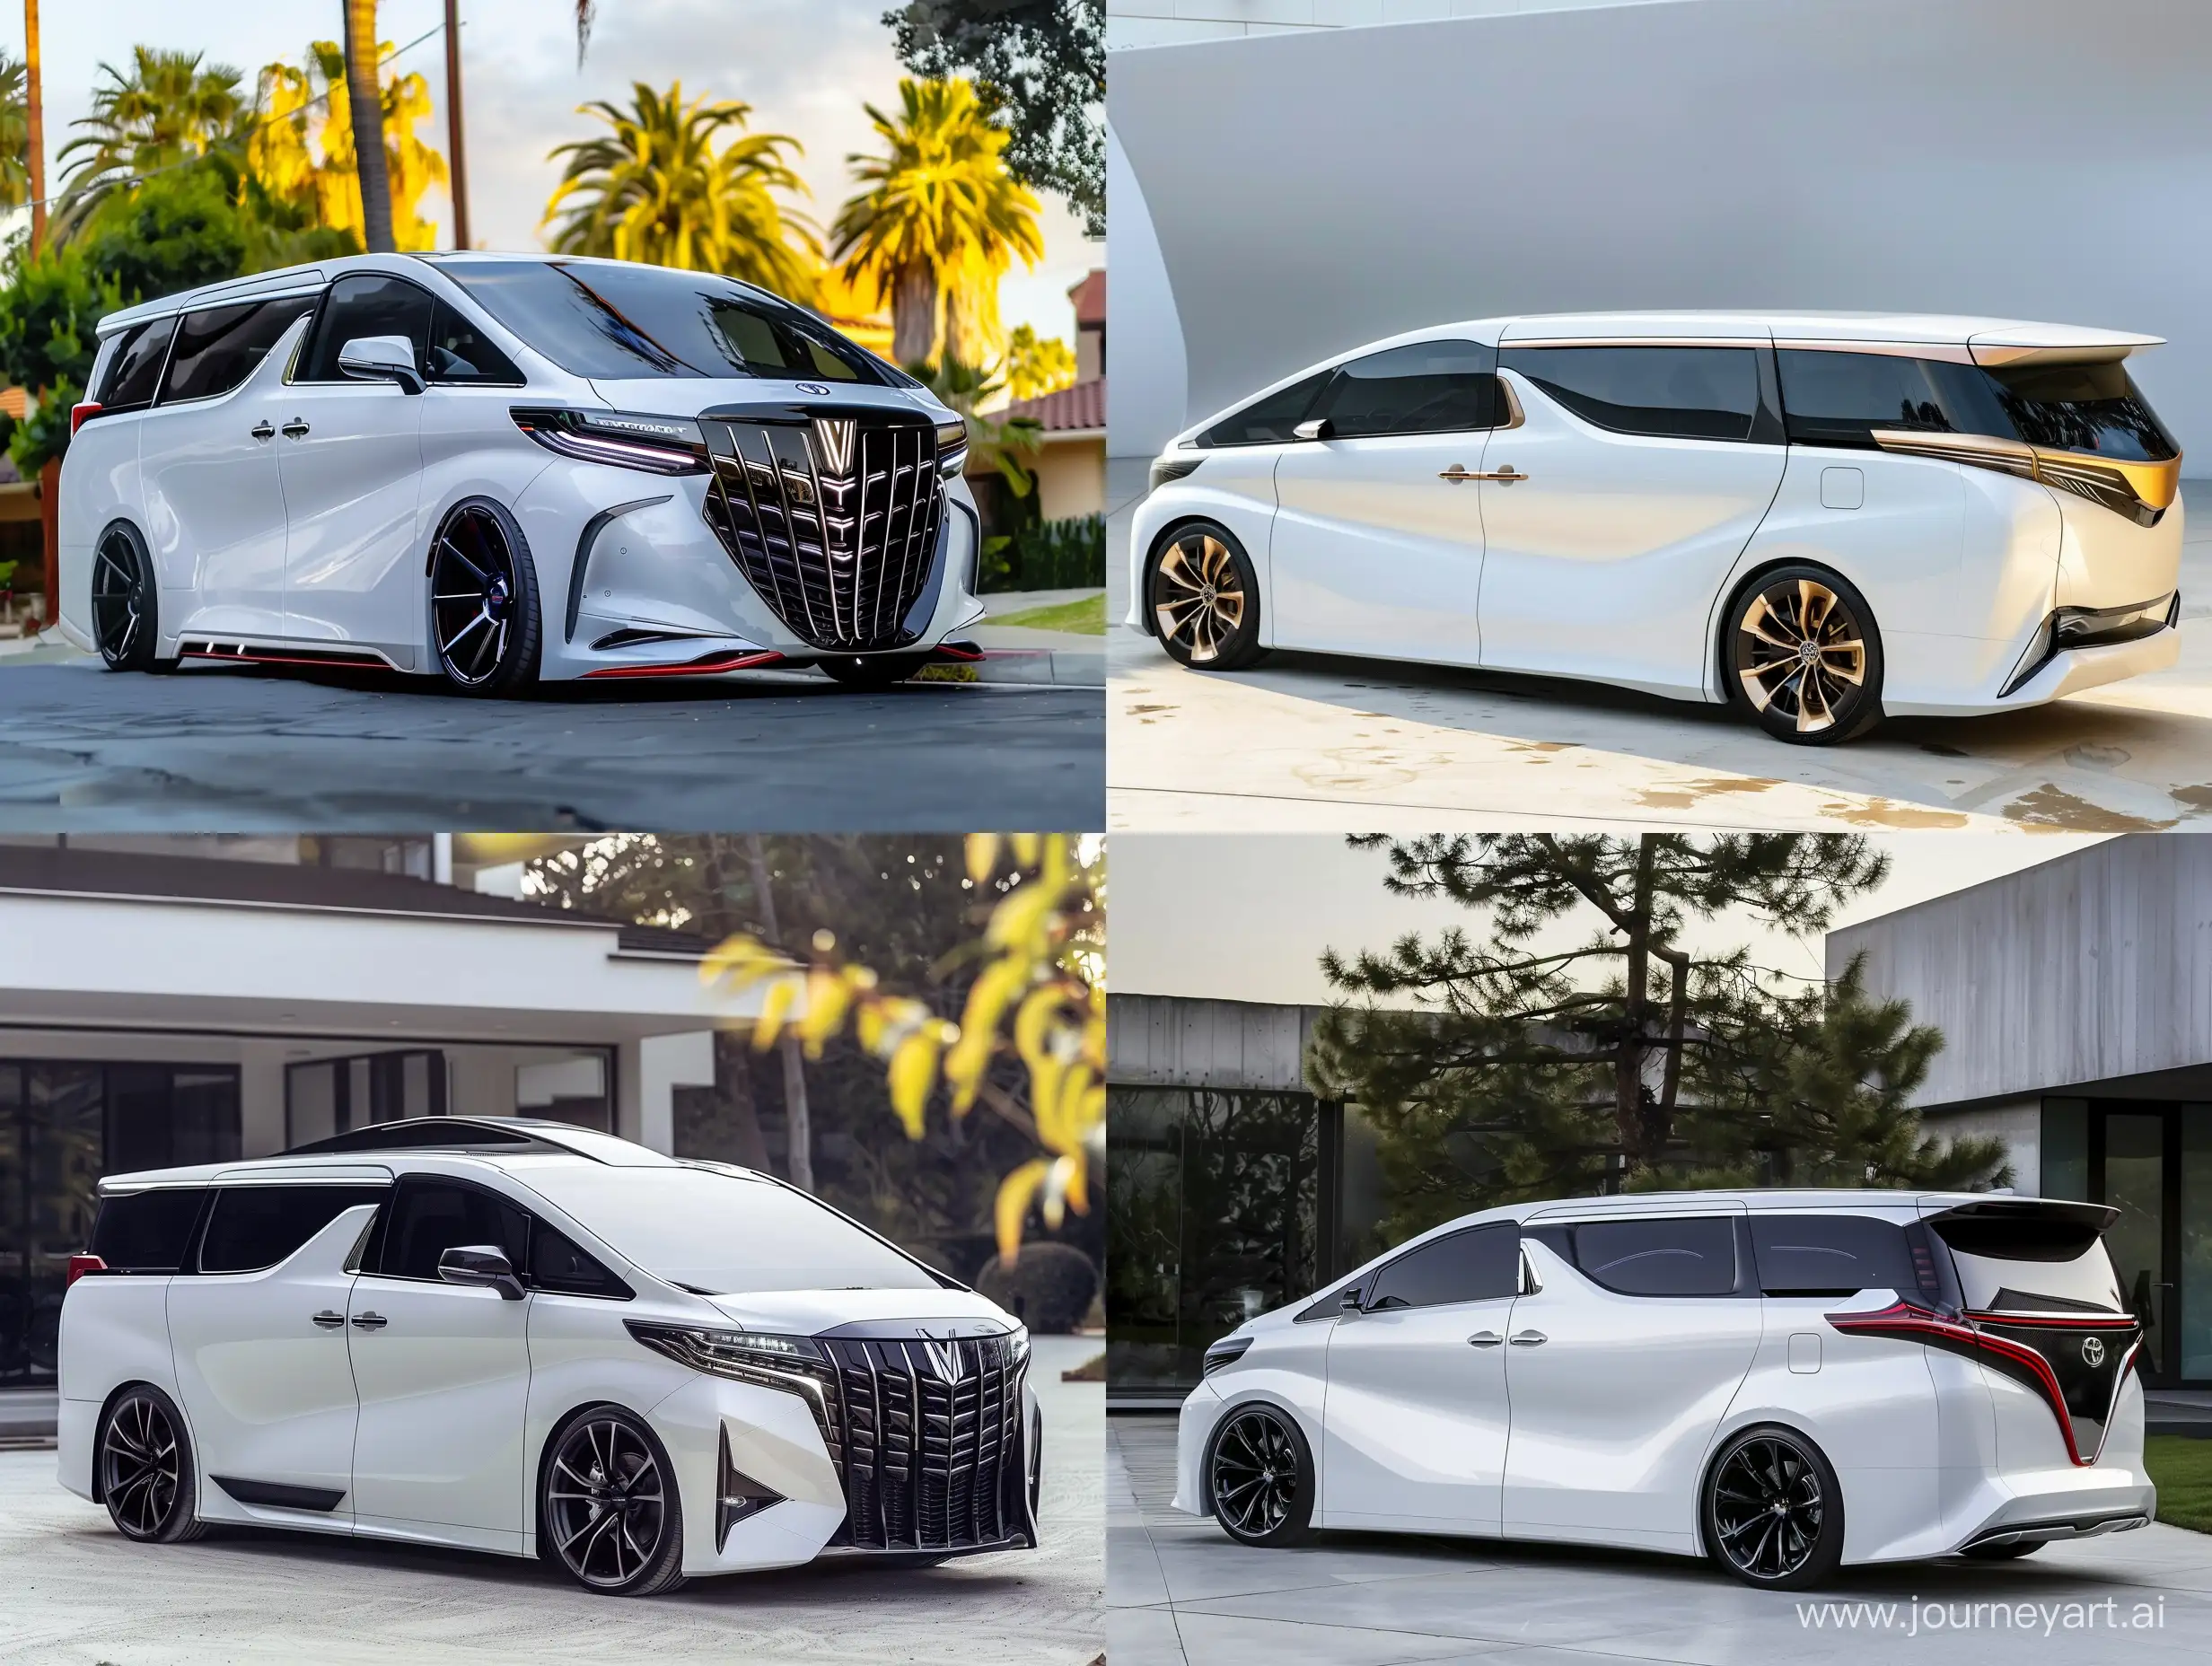 Futuristic-Toyota-Alphard-Minivan-Sleek-Design-and-Advanced-Features